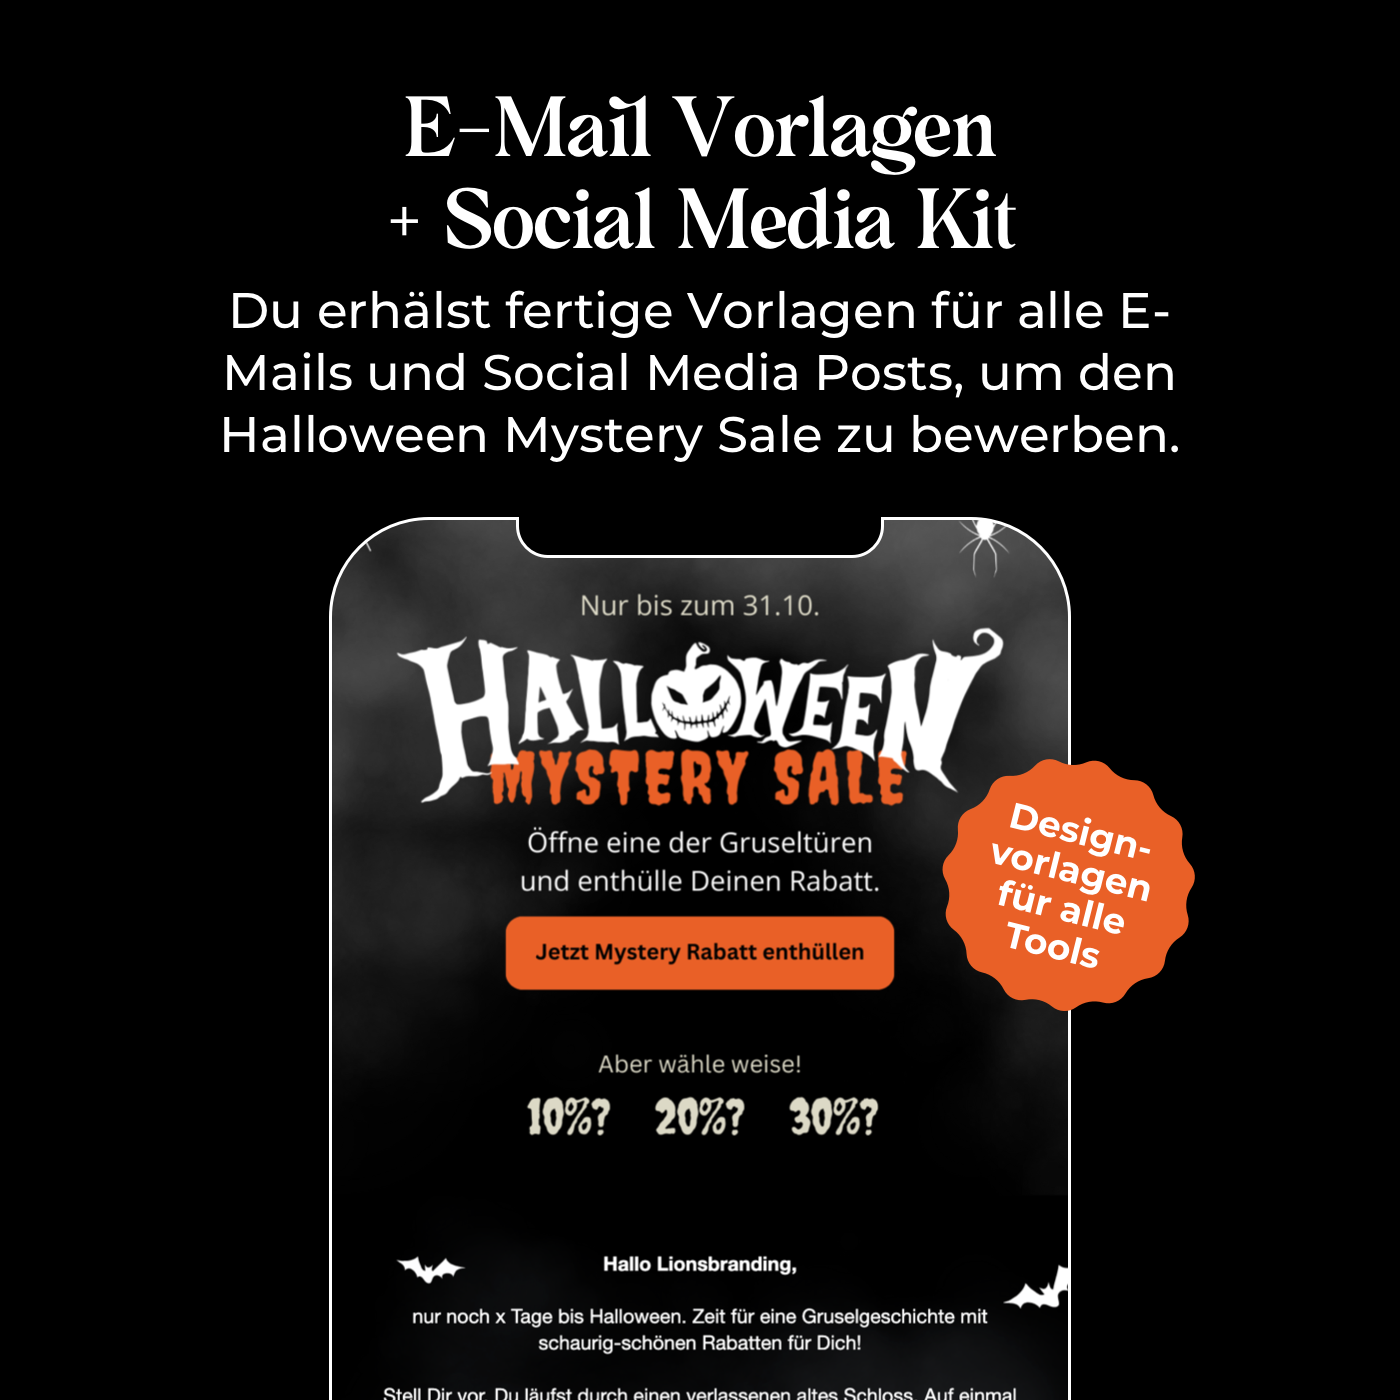 Halloween Mystery Sale